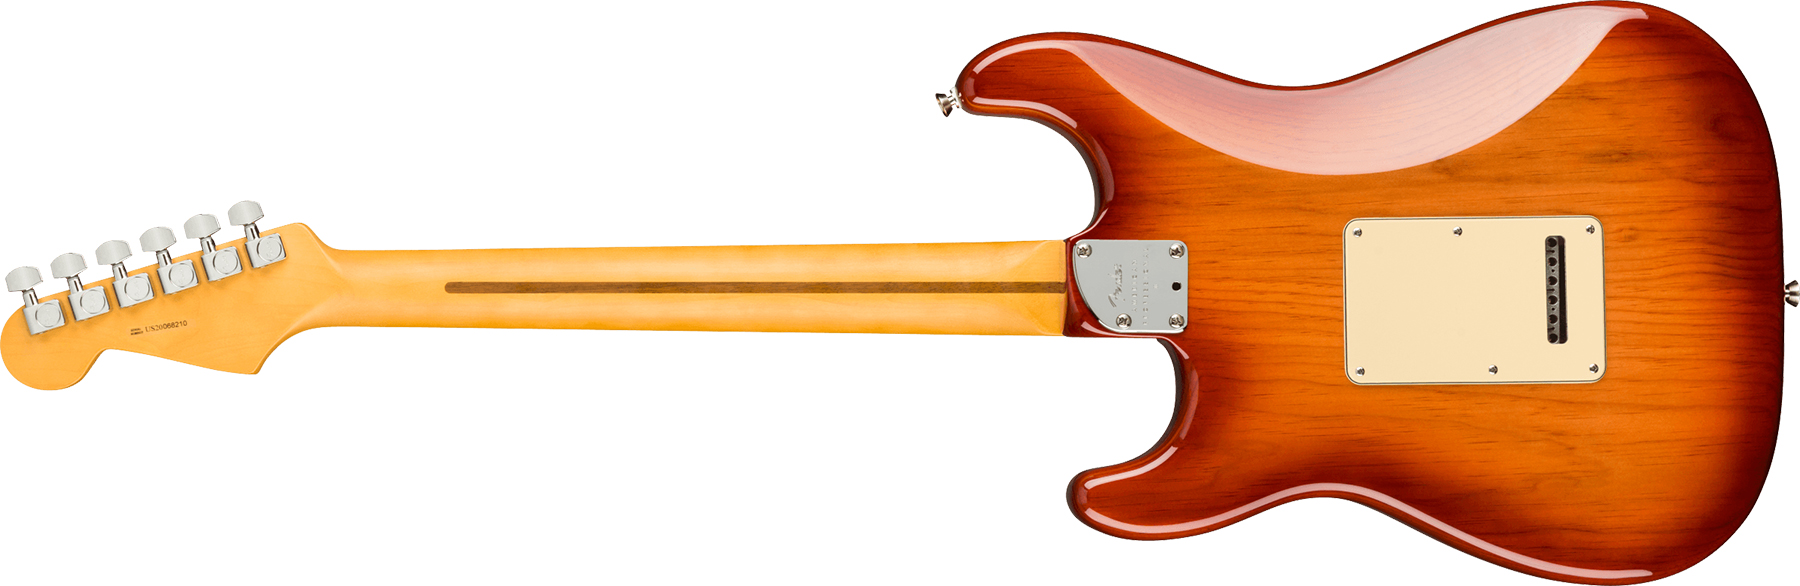 Fender Strat American Professional Ii Usa Mn - Sienna Sunburst - E-Gitarre in Str-Form - Variation 1